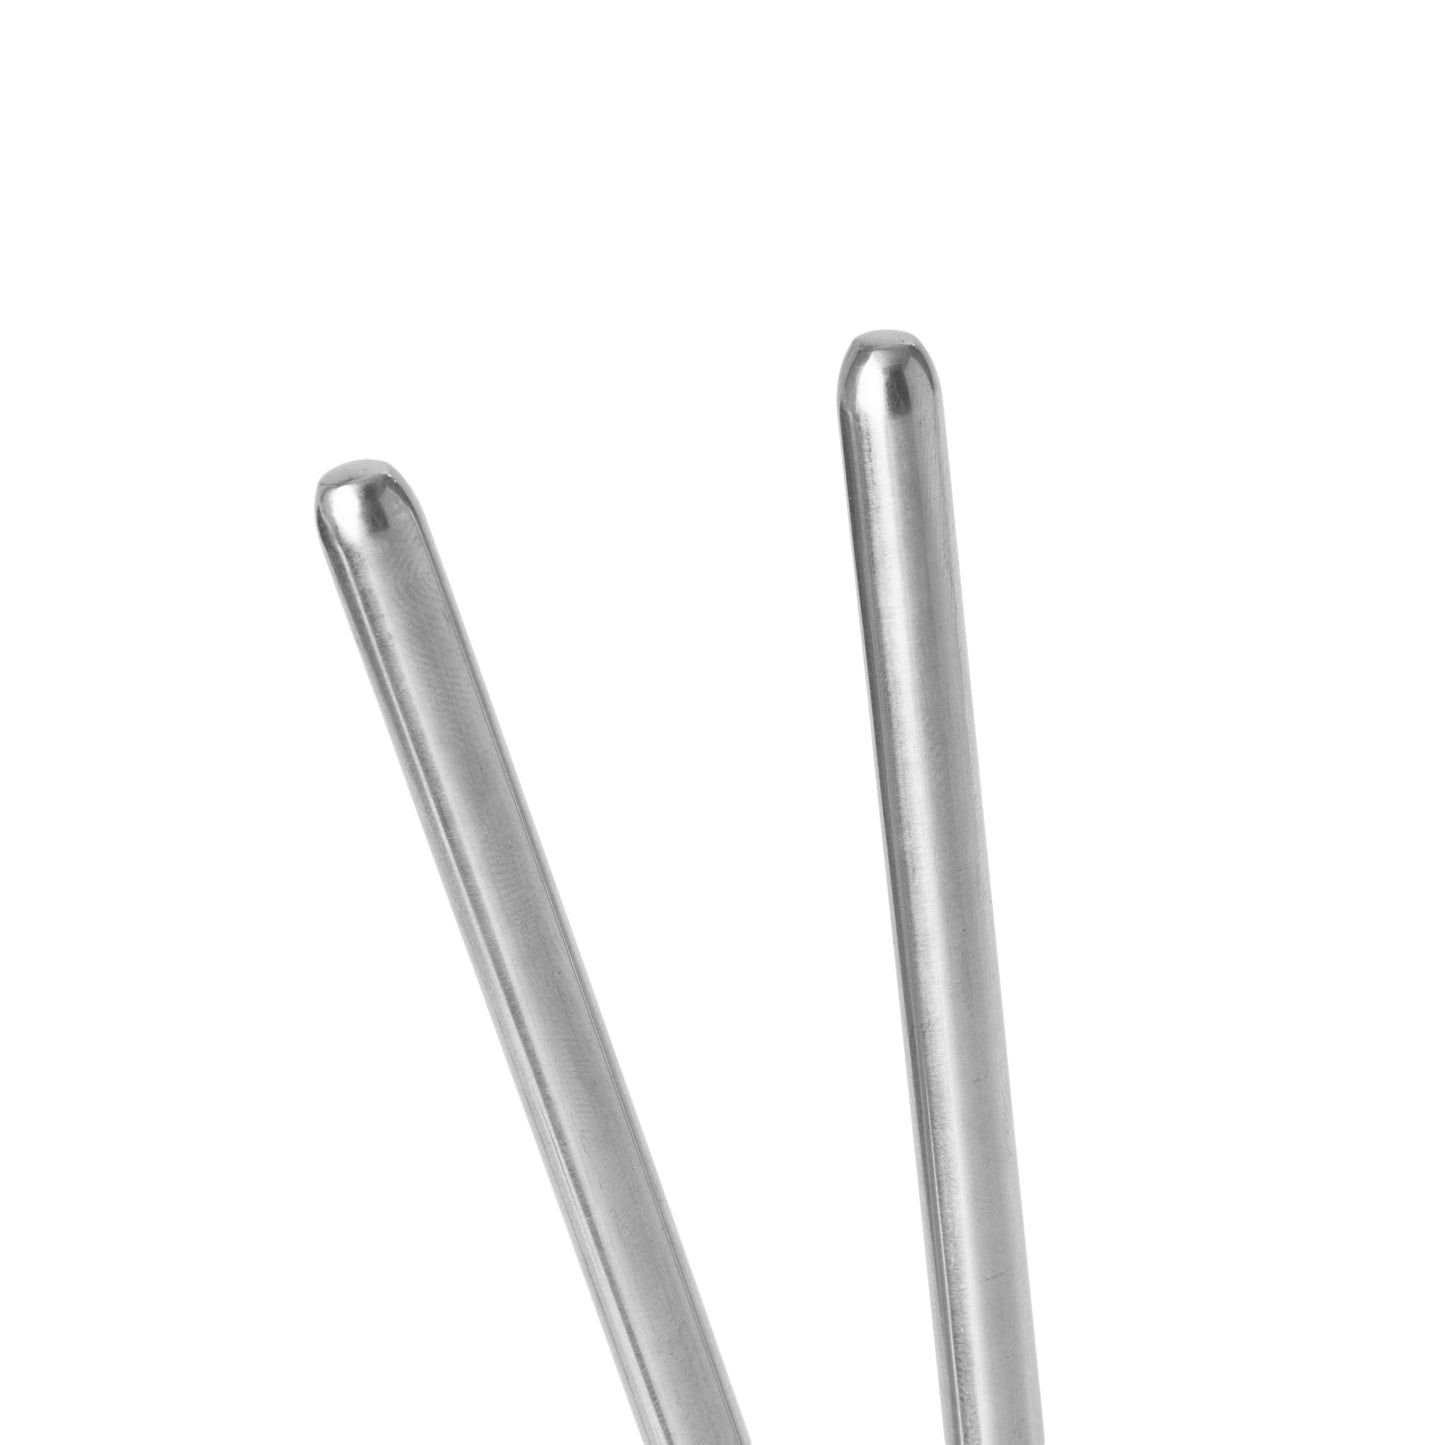 Reusable Stainless Steel Metal Chopsticks Set, 5 Pair Set